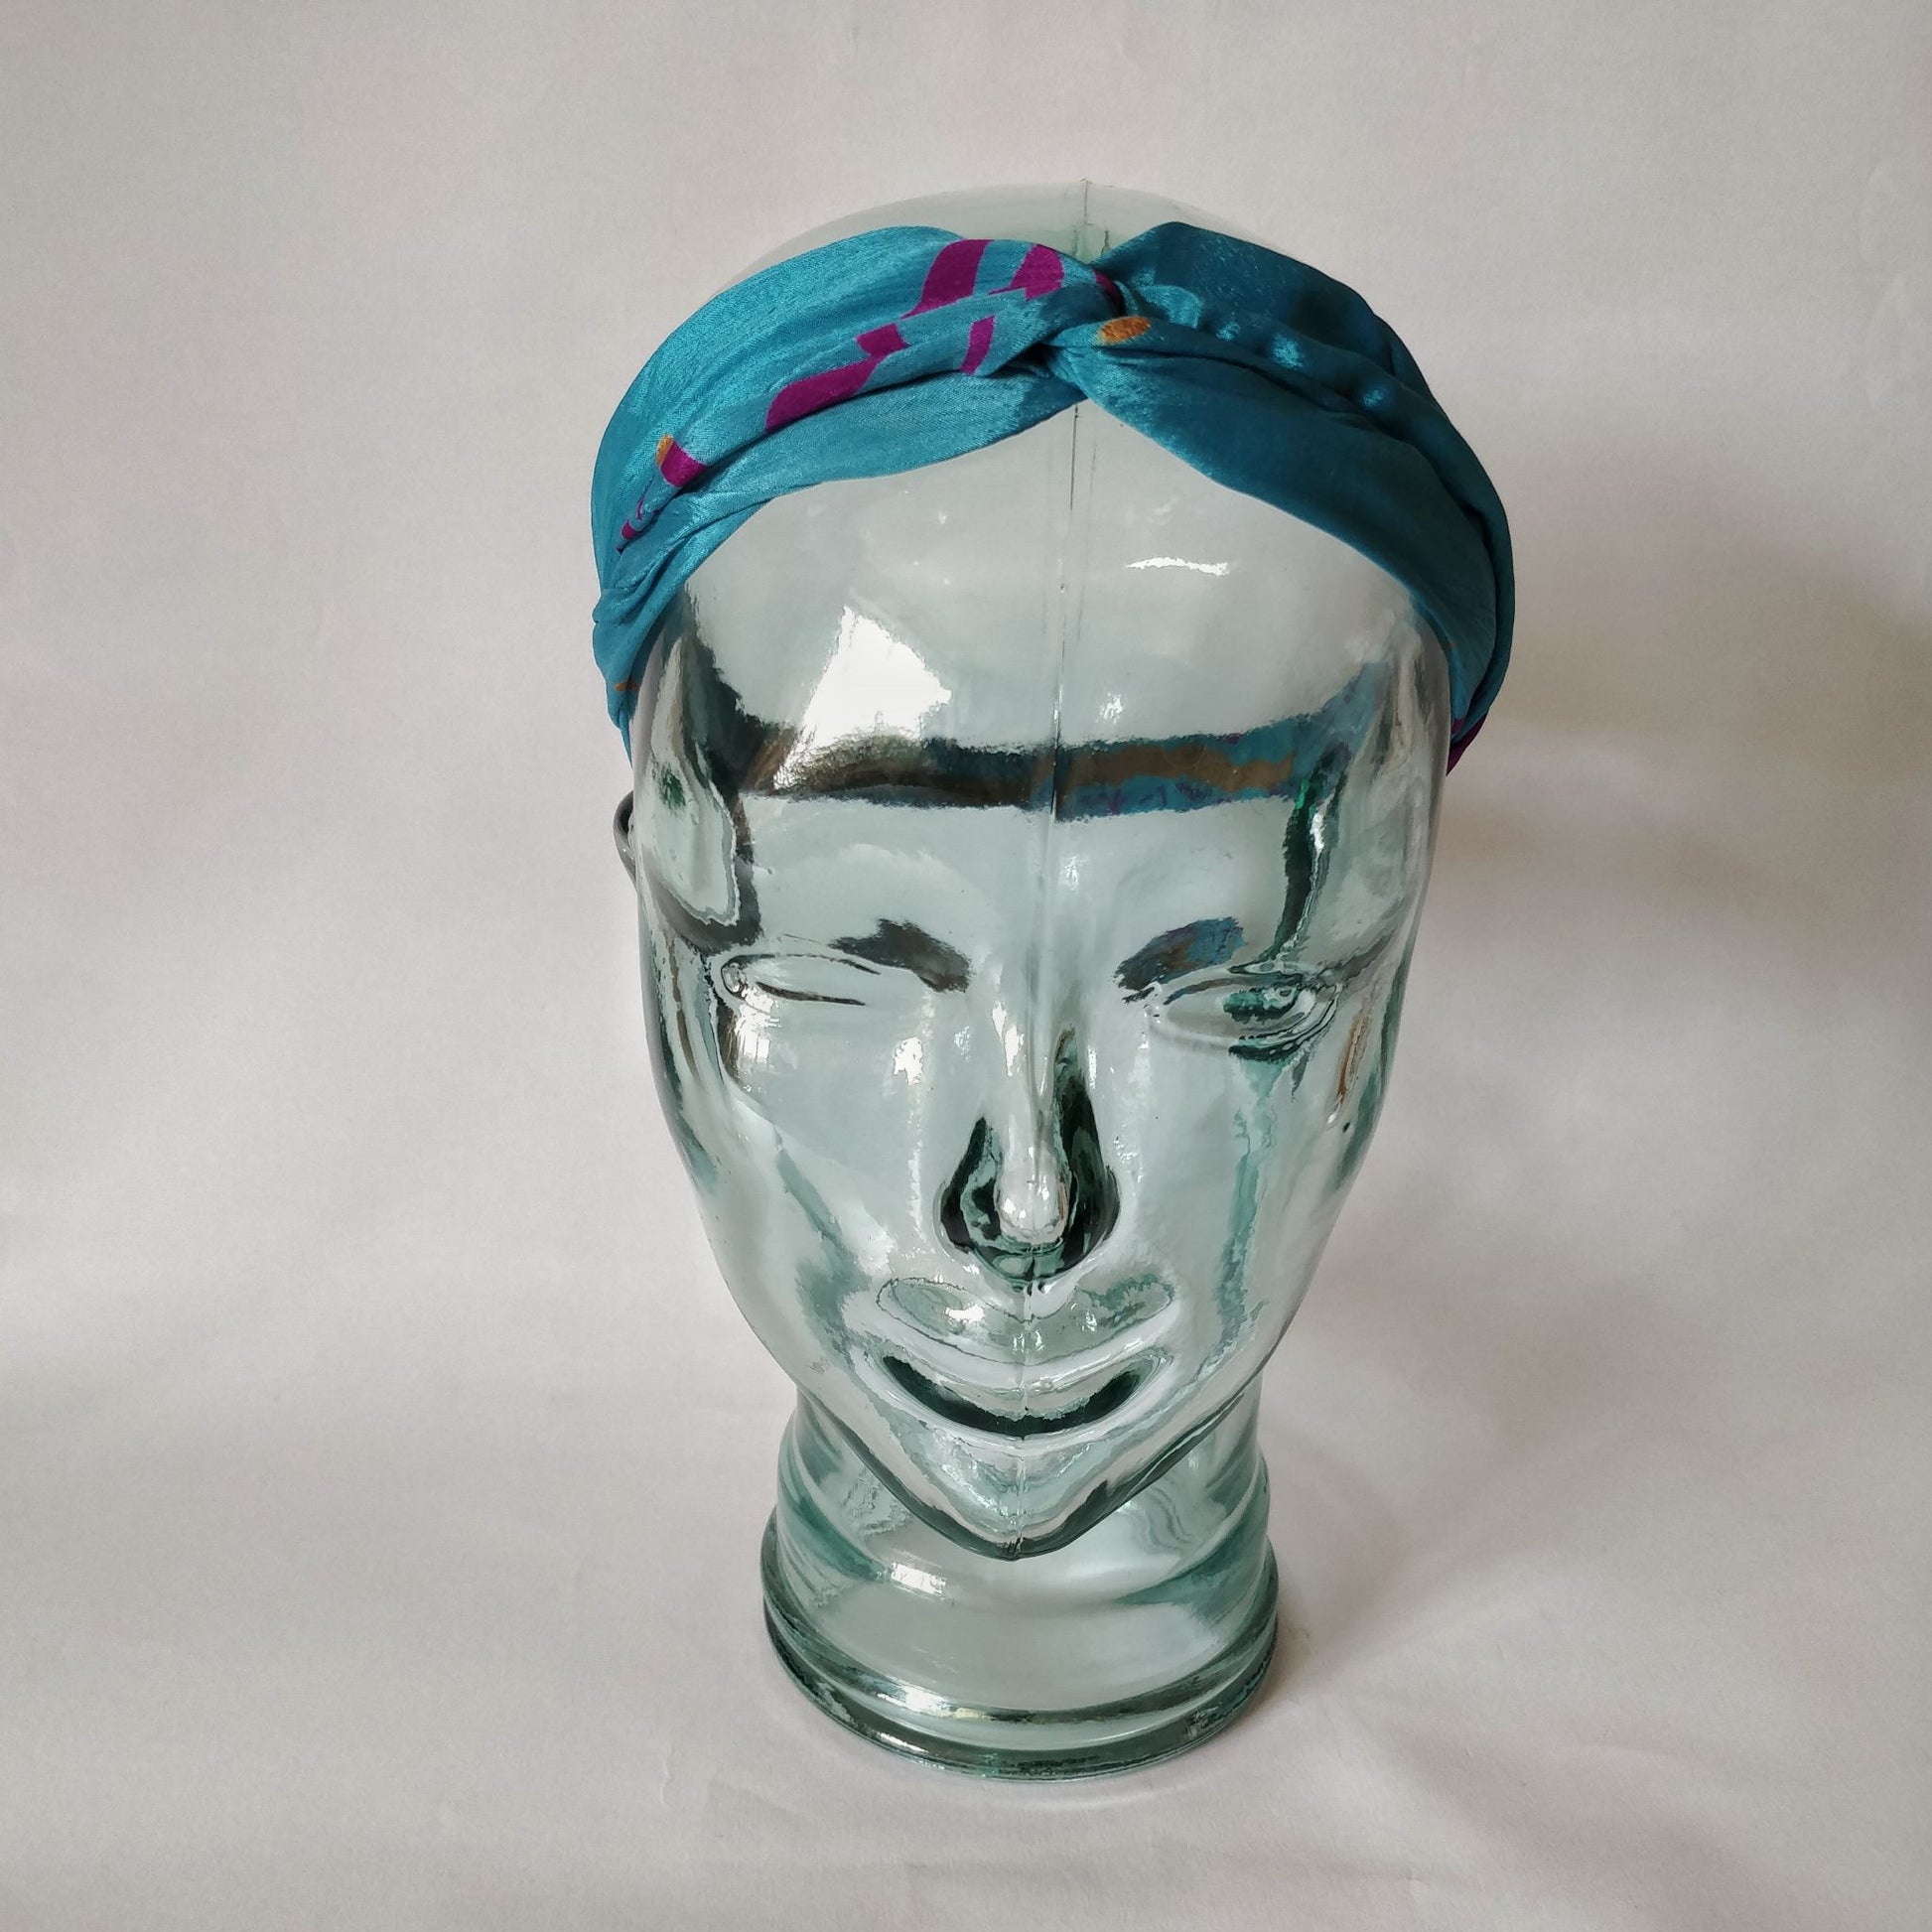 Turban Headband in blue - Sustainable Hair Accessories Empowering Women